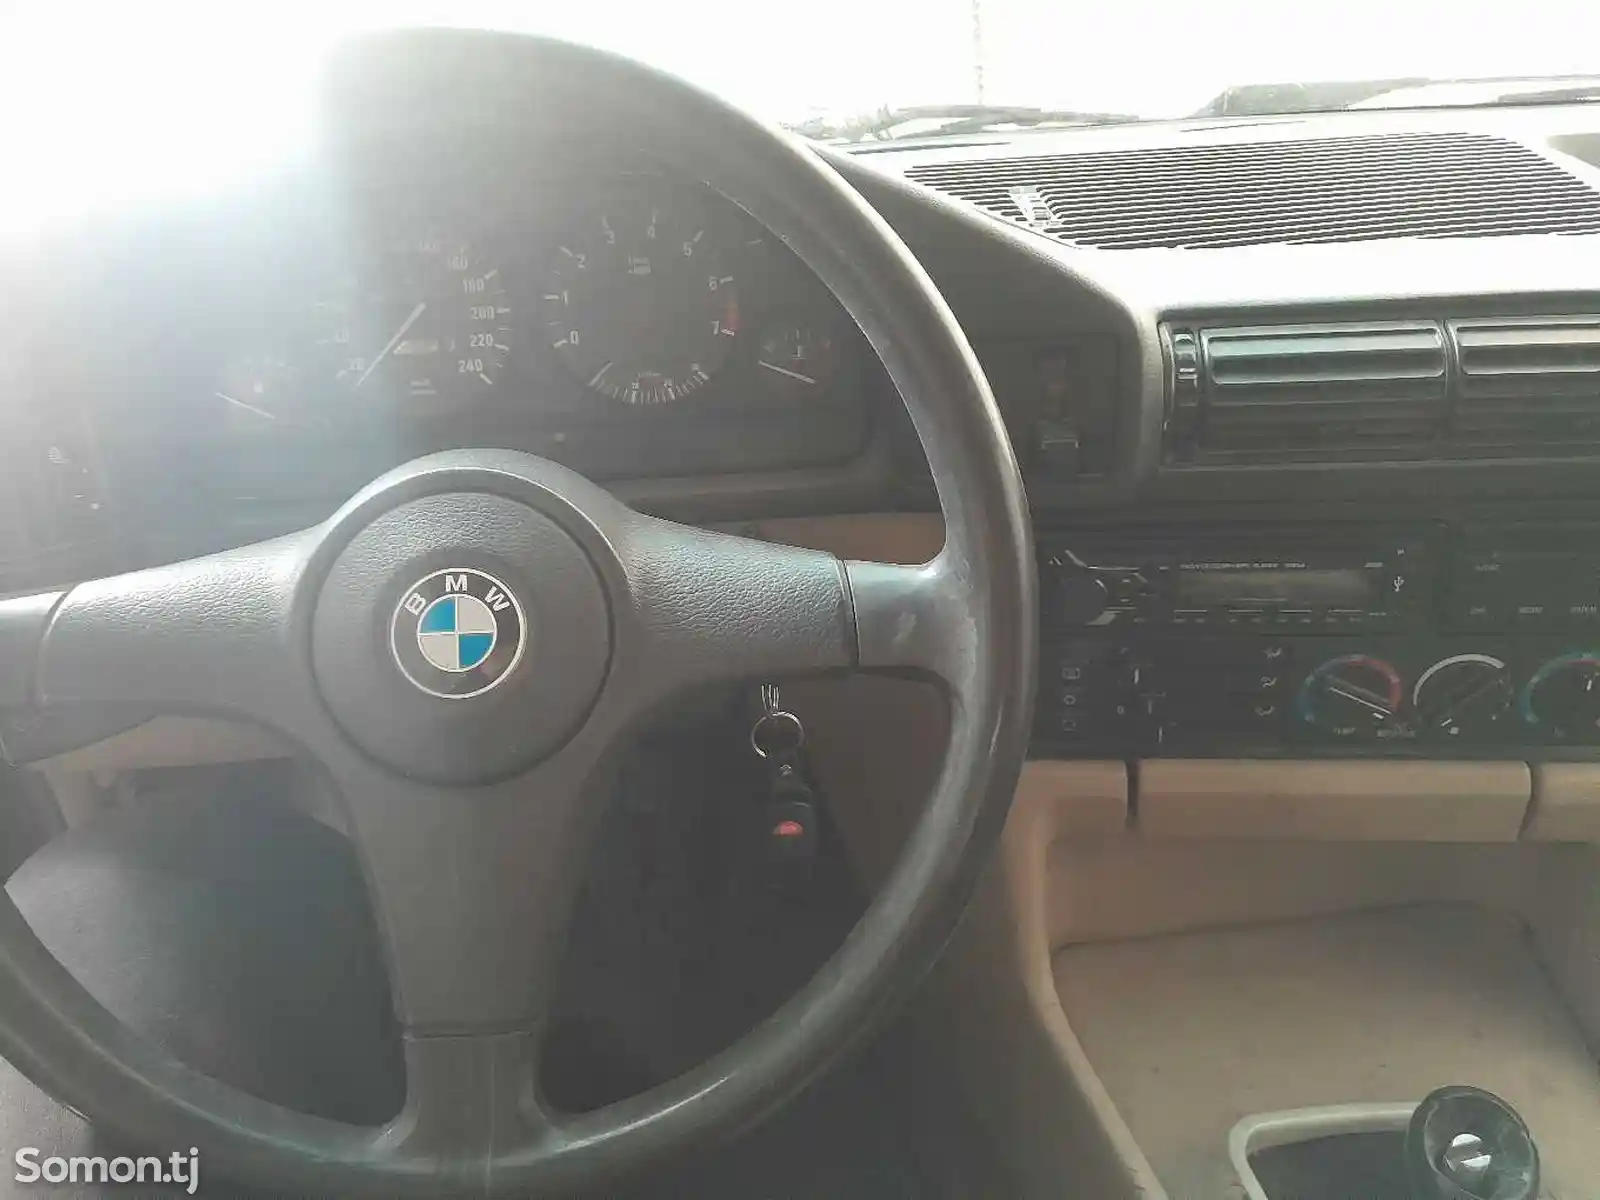 BMW 5 series, 1989-9